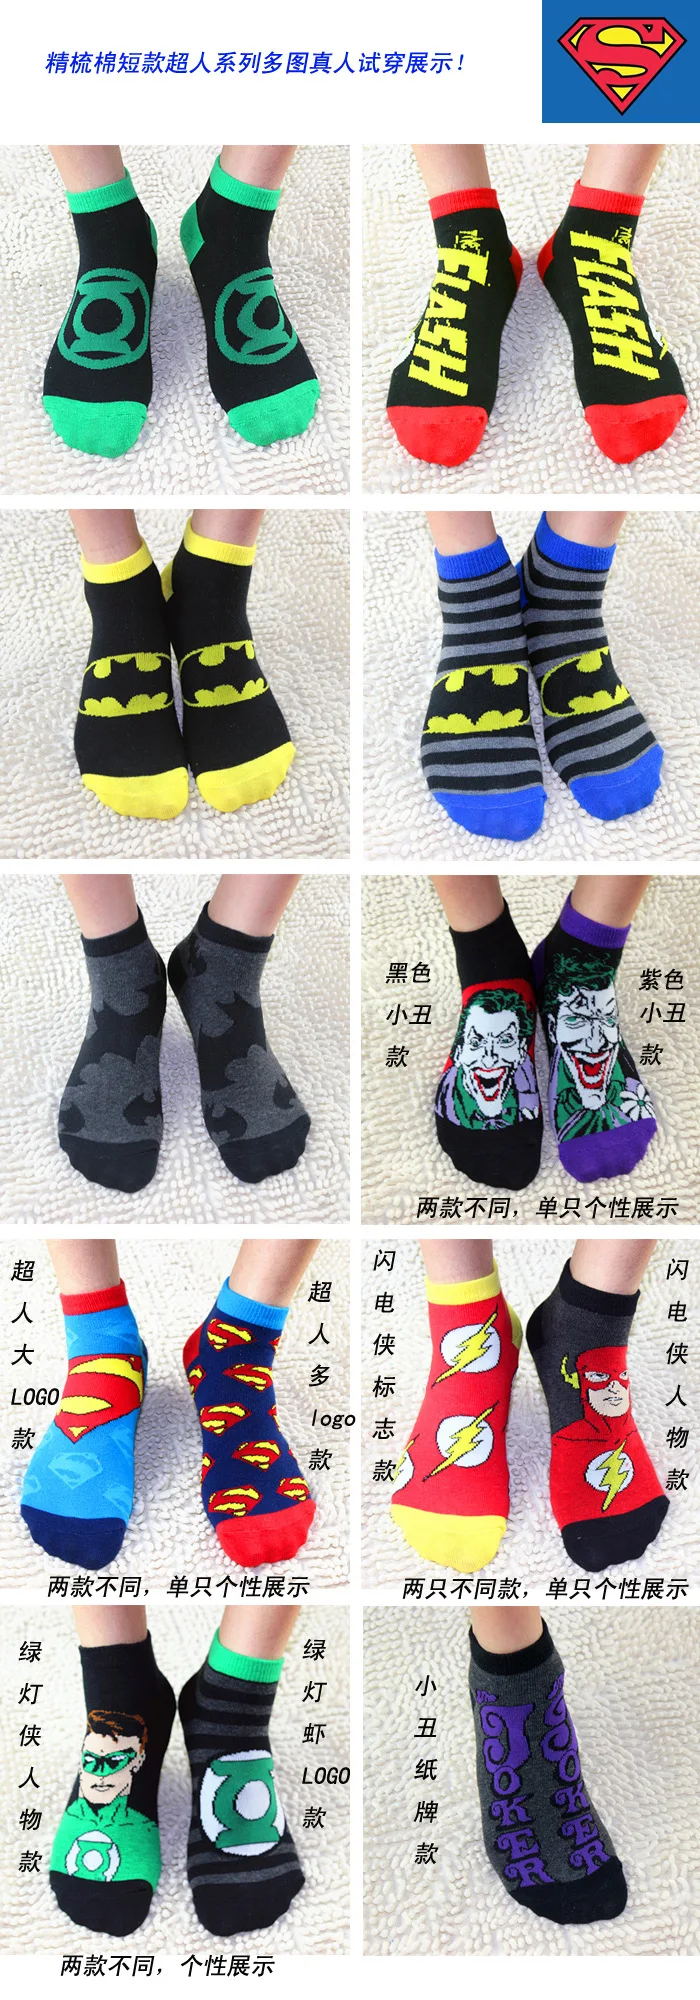 cartoon Marvel Avengers Batman joker sock flash comfort funny men women novelty striped printed happy color toe socks Skarpetki